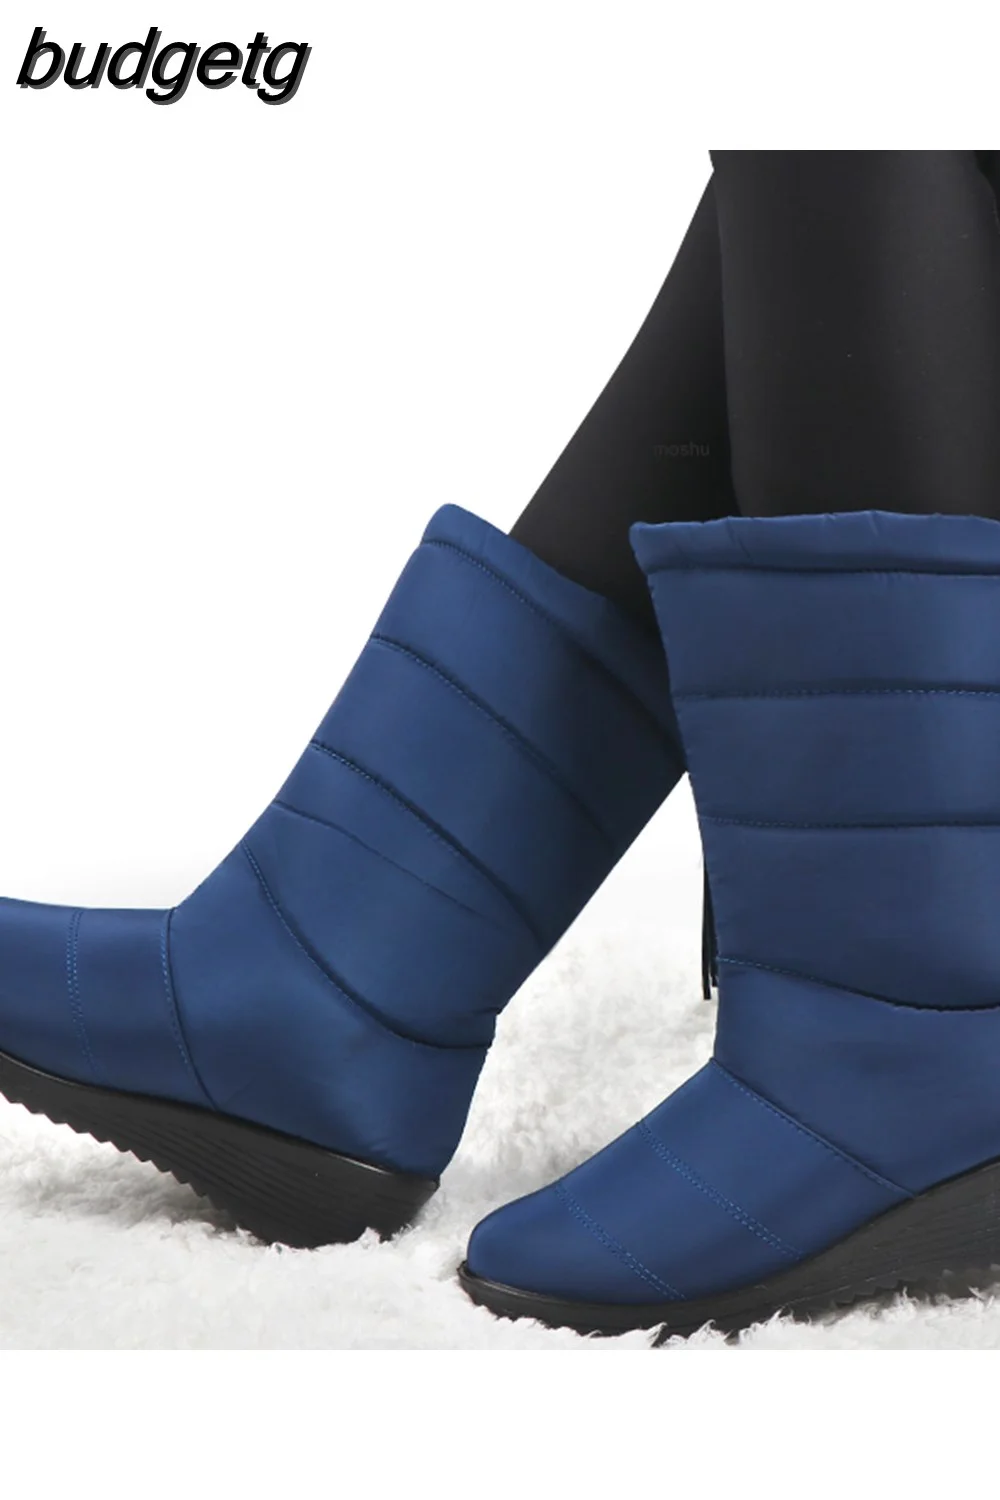 budgetg Women Boots Mid-Calf Down Boots High Bota Waterproof Ladies Snow Winter Shoes Woman Plush Insole Bota Feminina 2023